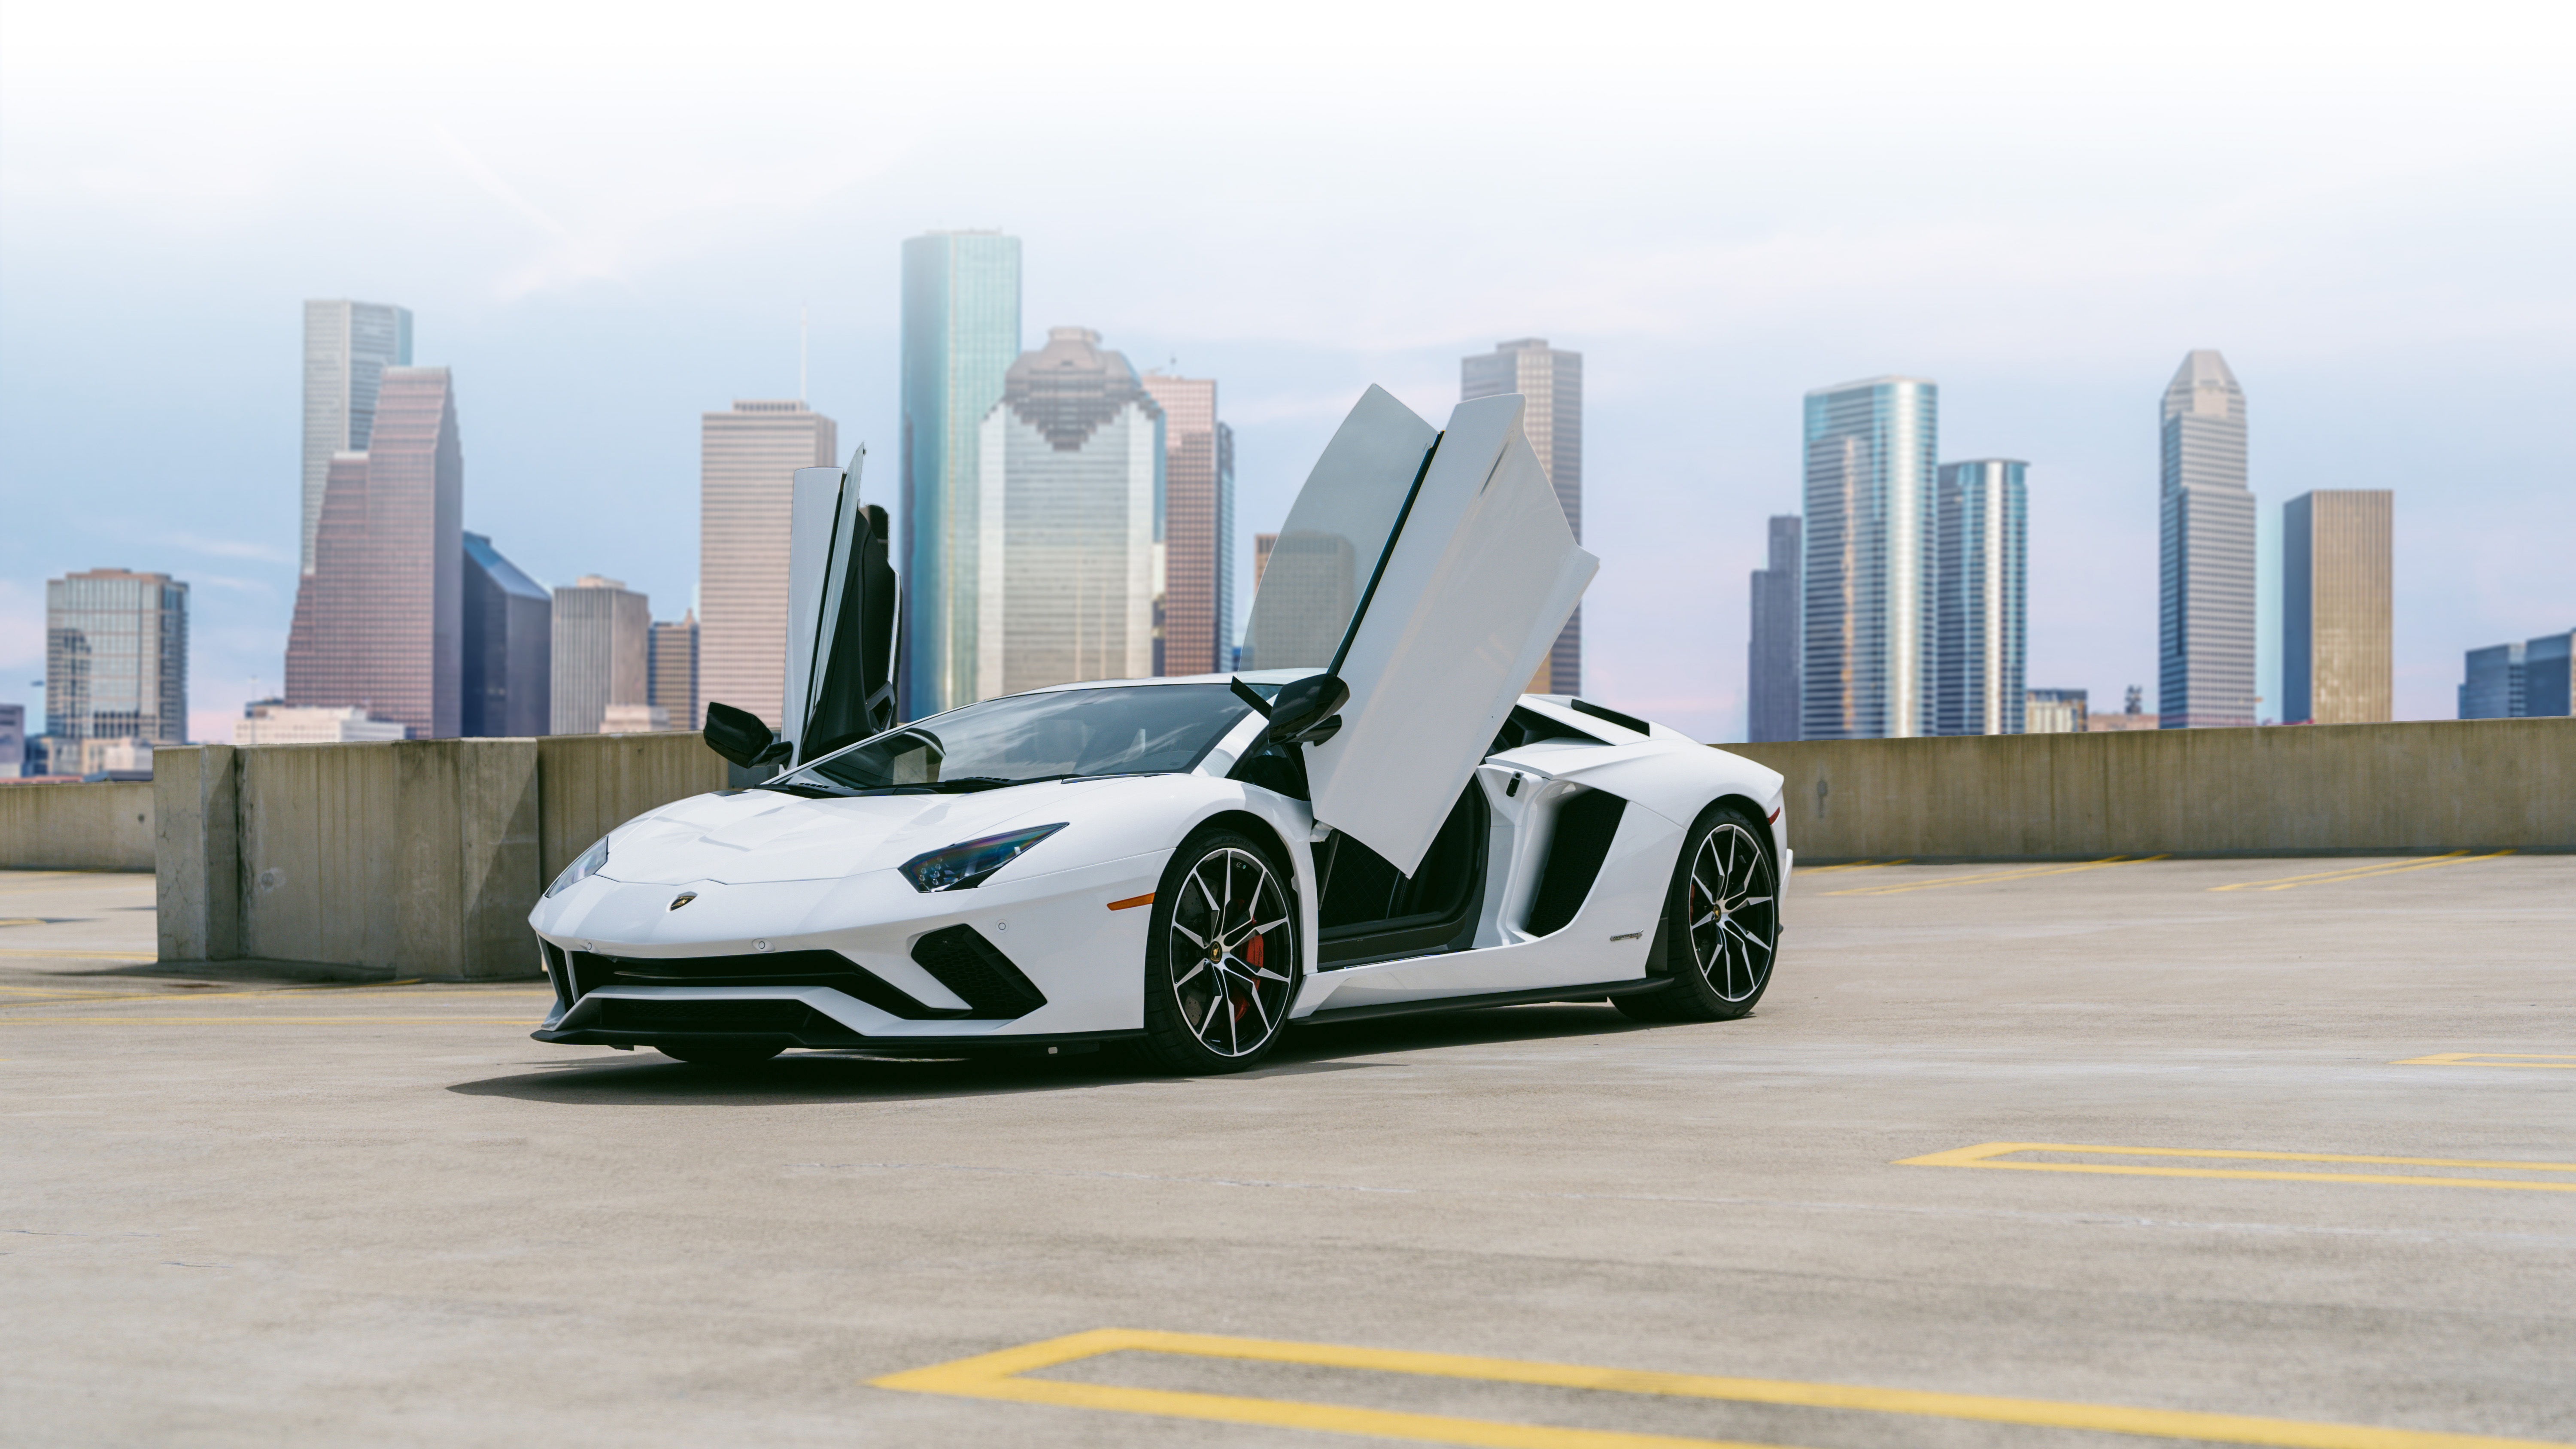 White Lamborghini Aventador 5k 2018, HD Cars, 4k Wallpapers, Images